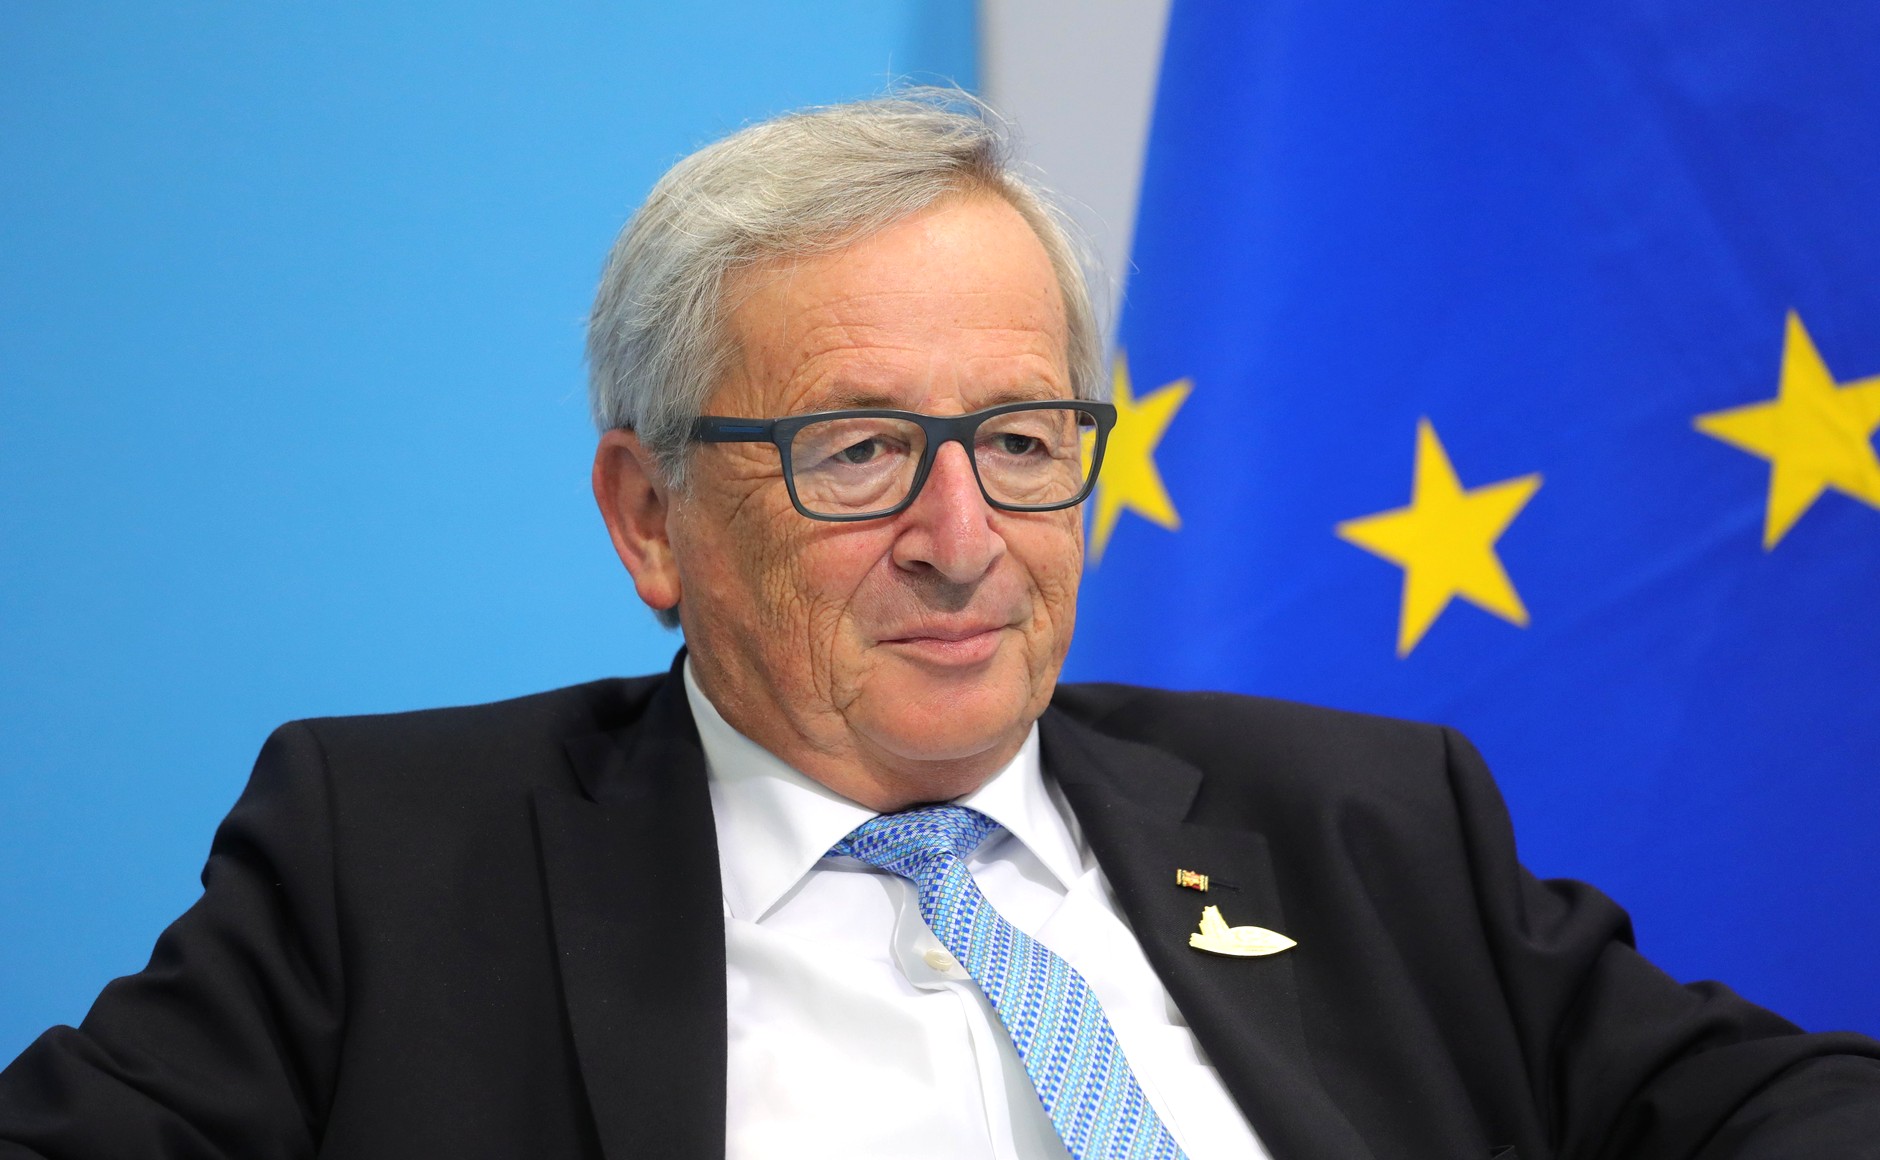 Juncker warns of far-right 'danger' ahead of EU vote